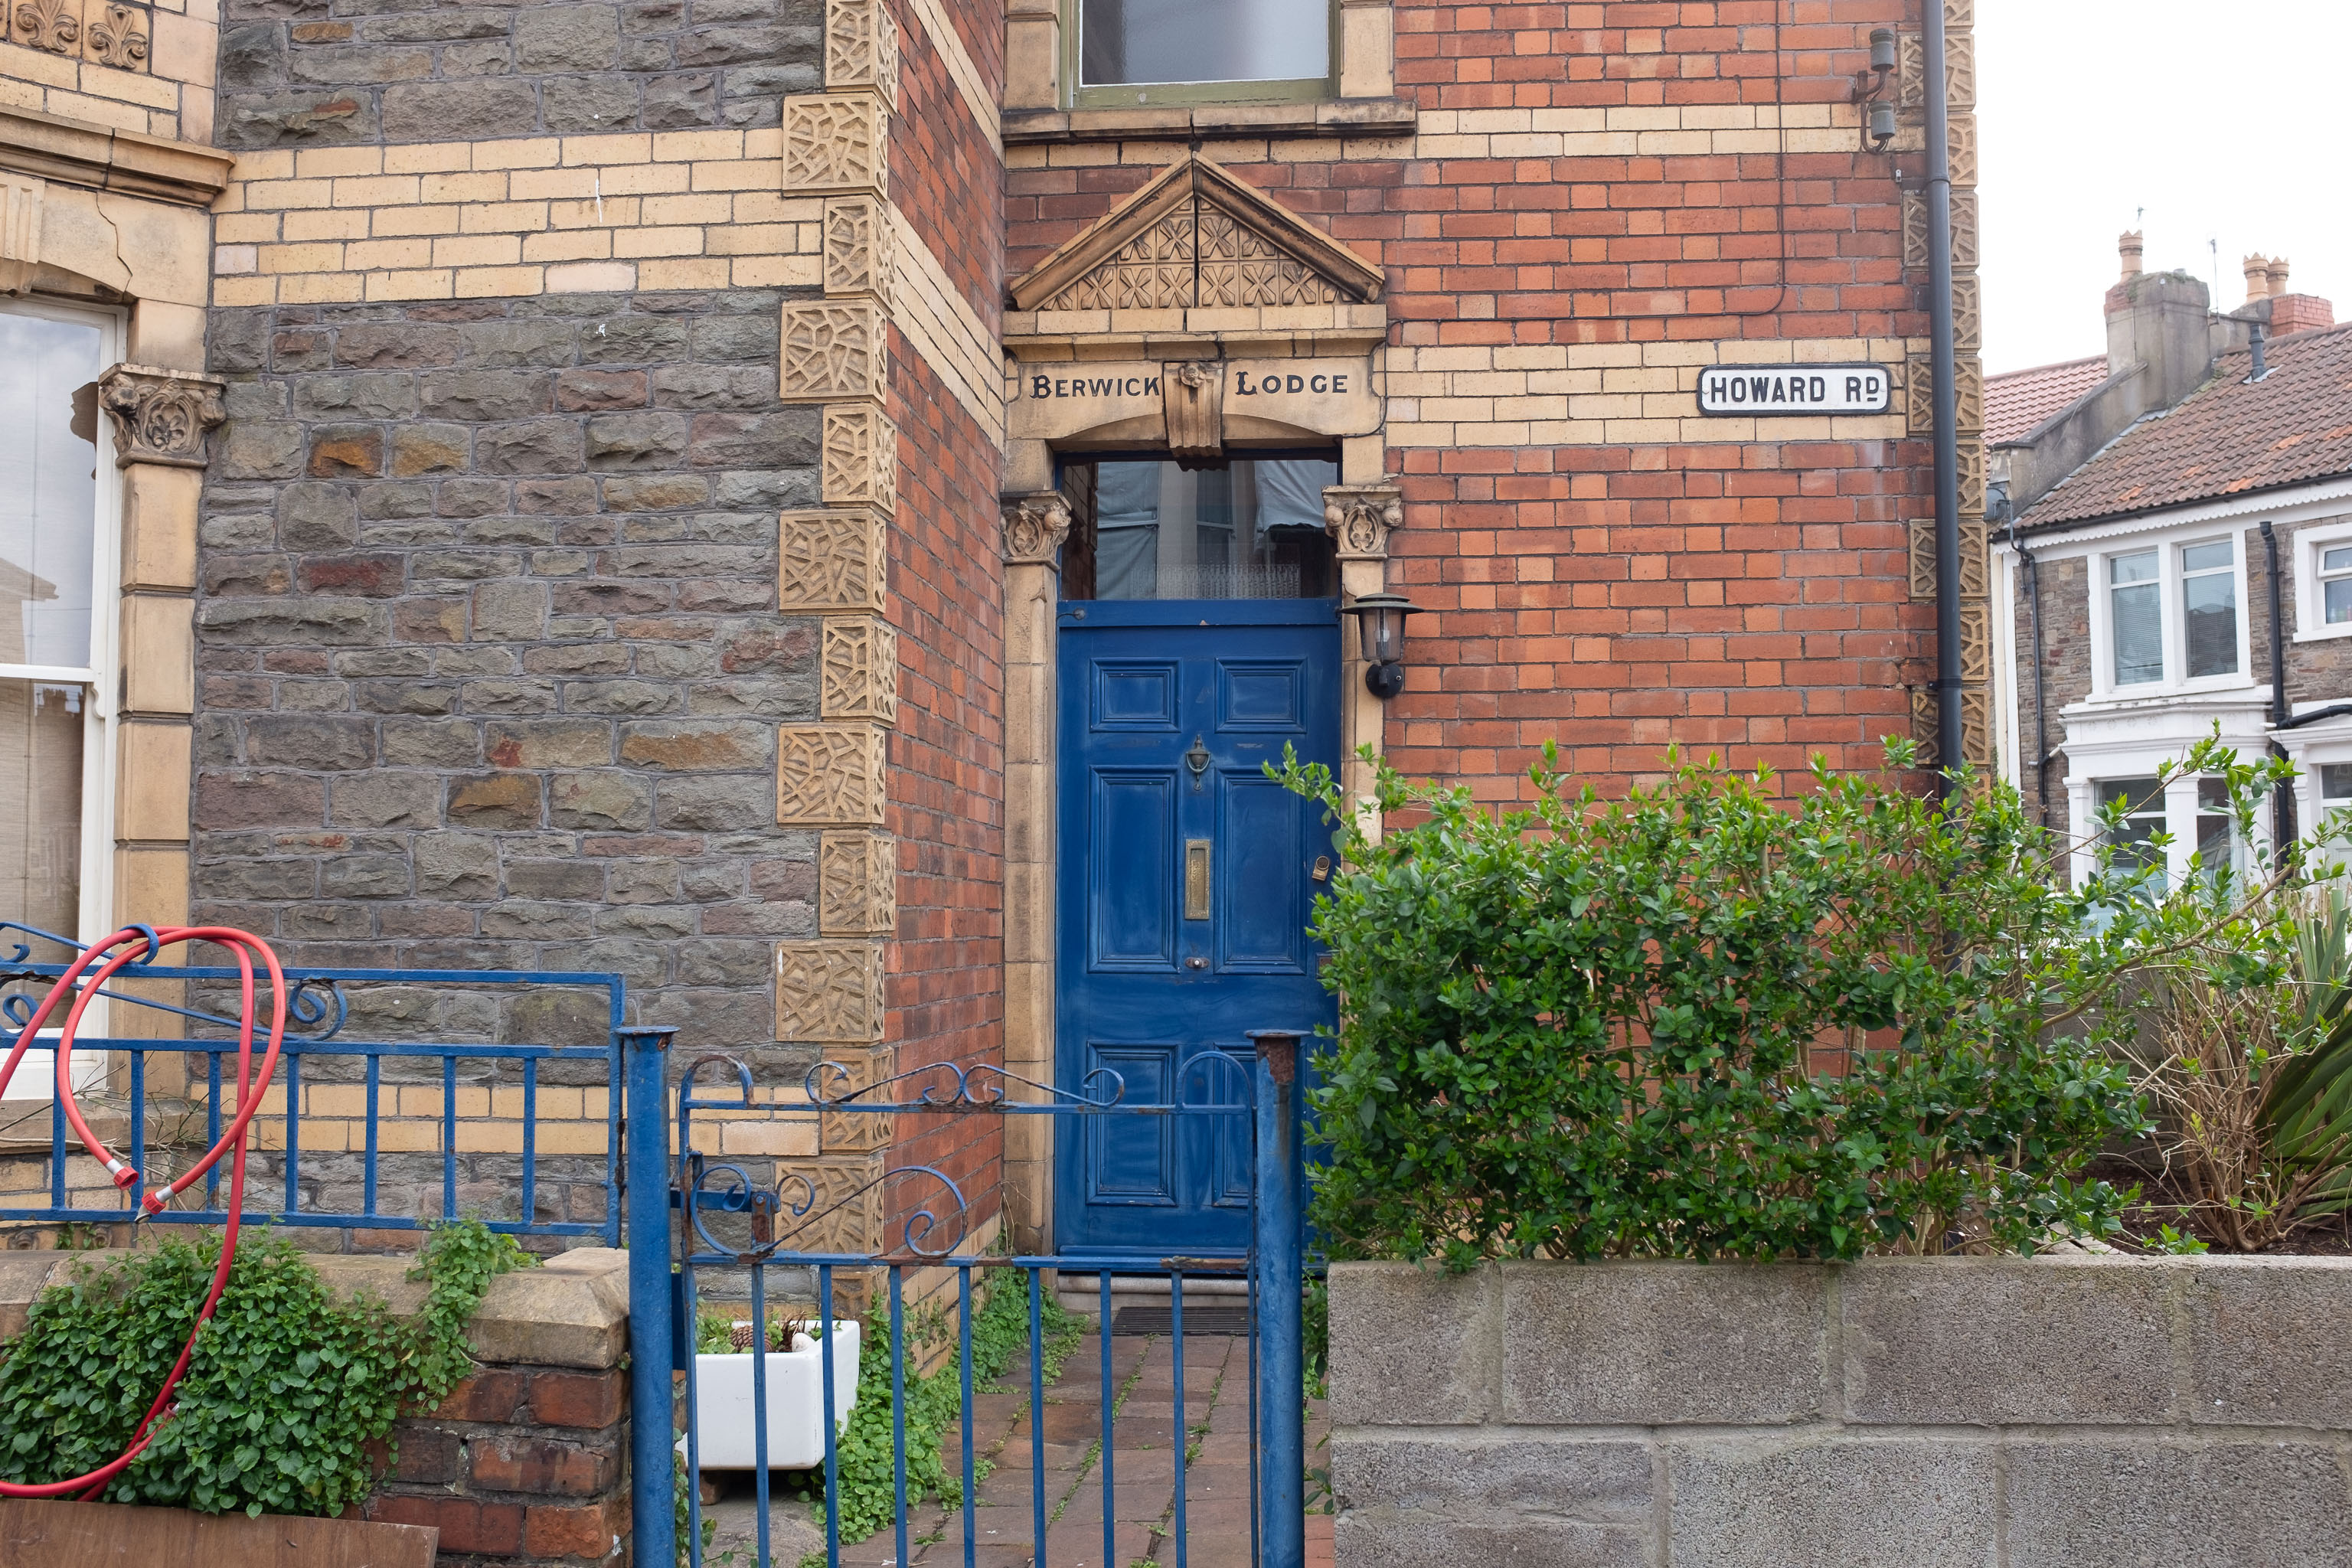 Berwick Lodge
Lovely doorway.
